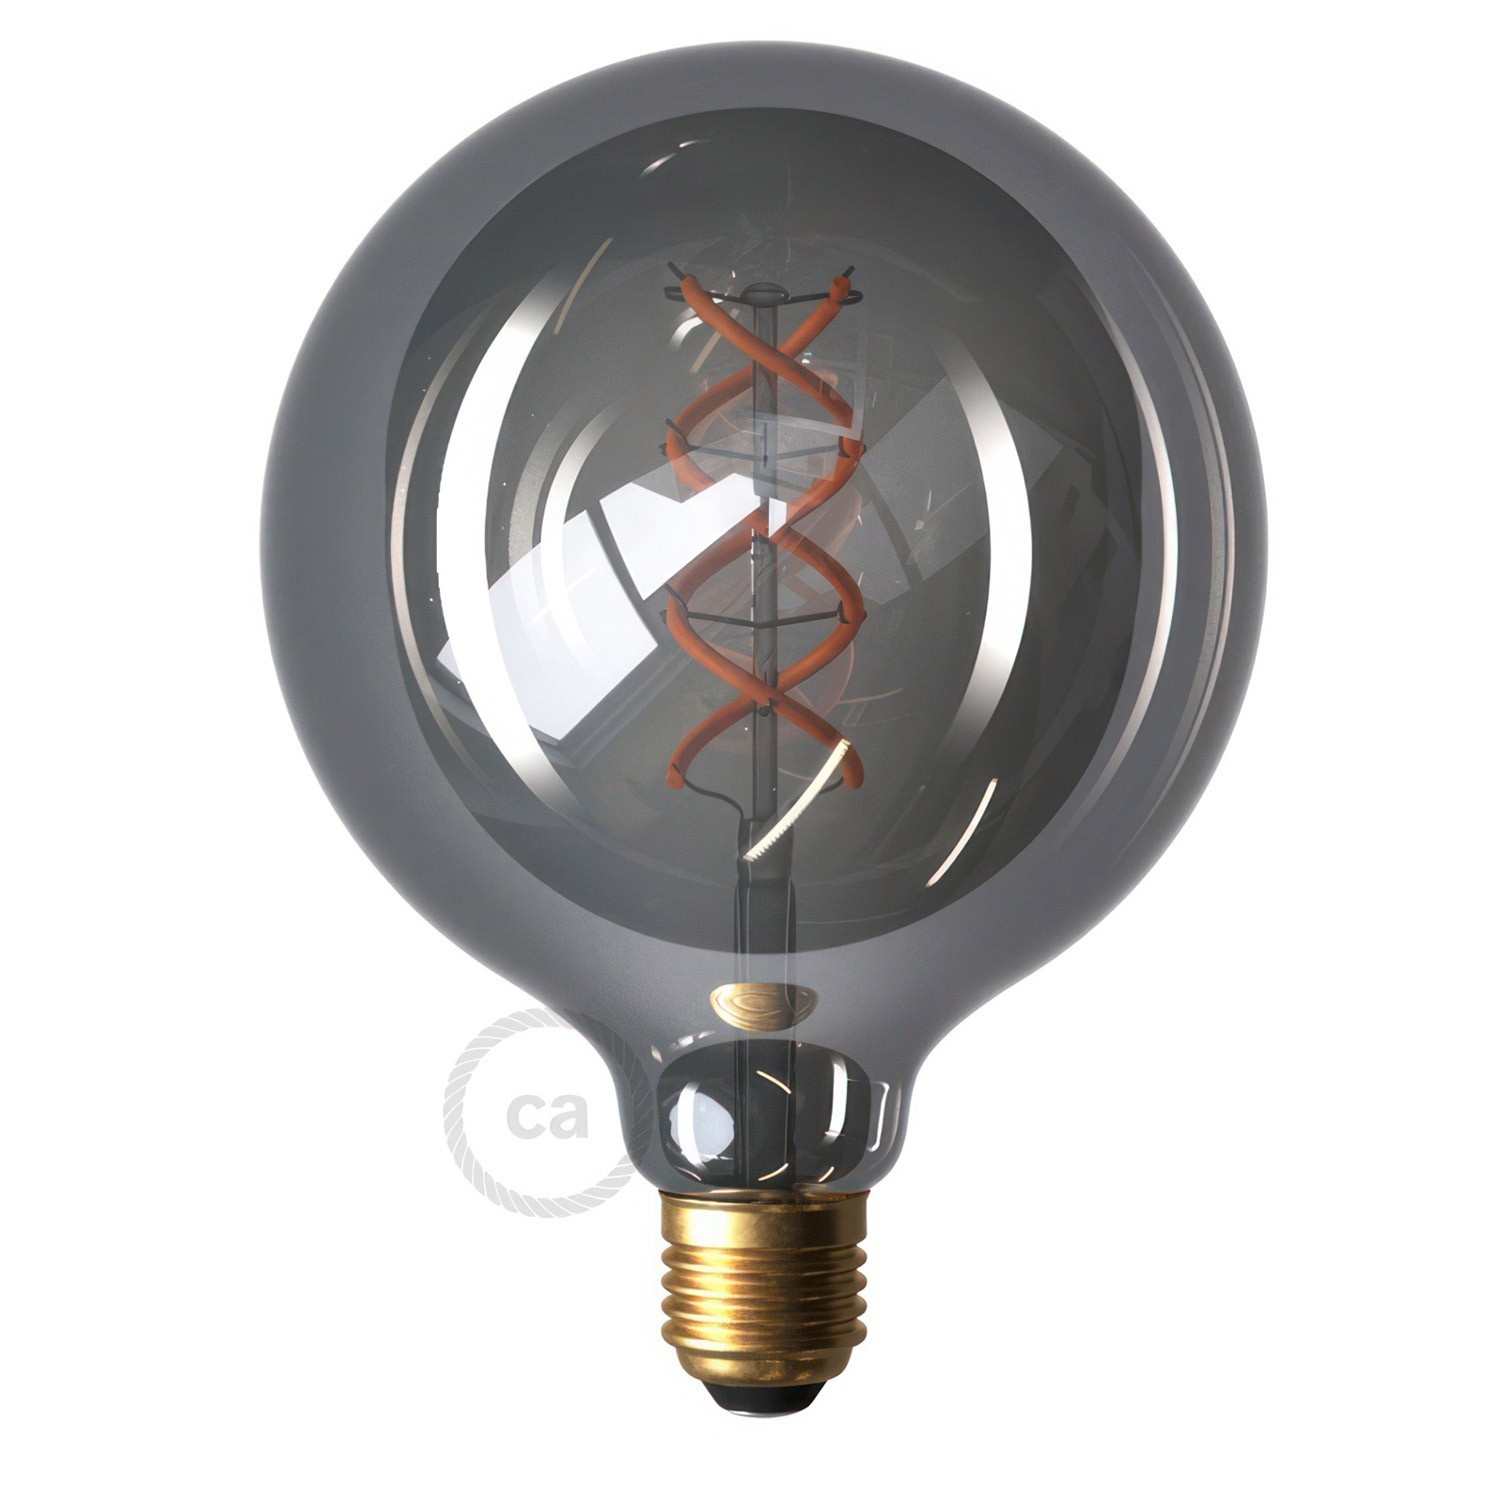 Posaluce Globo Leather Table Lamp with two-pin plug